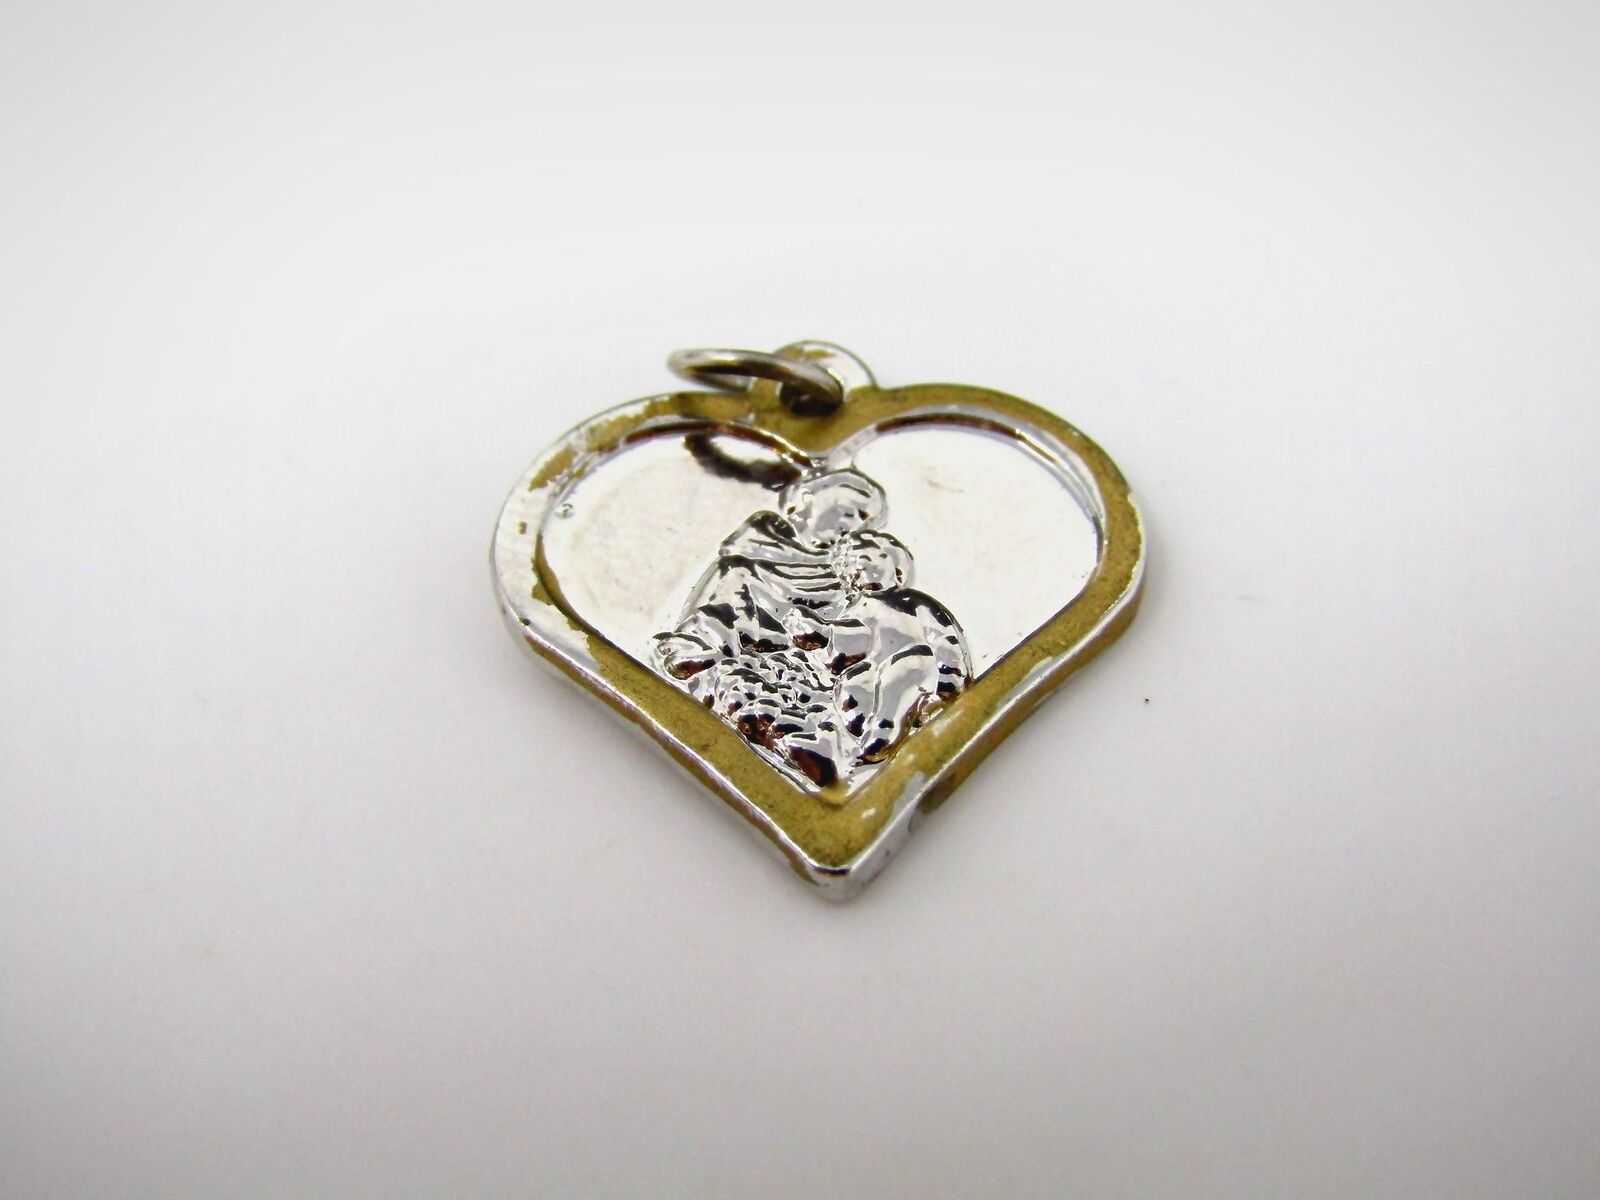 Vintage Christian Medal Charm: St. Anthony Heart Design